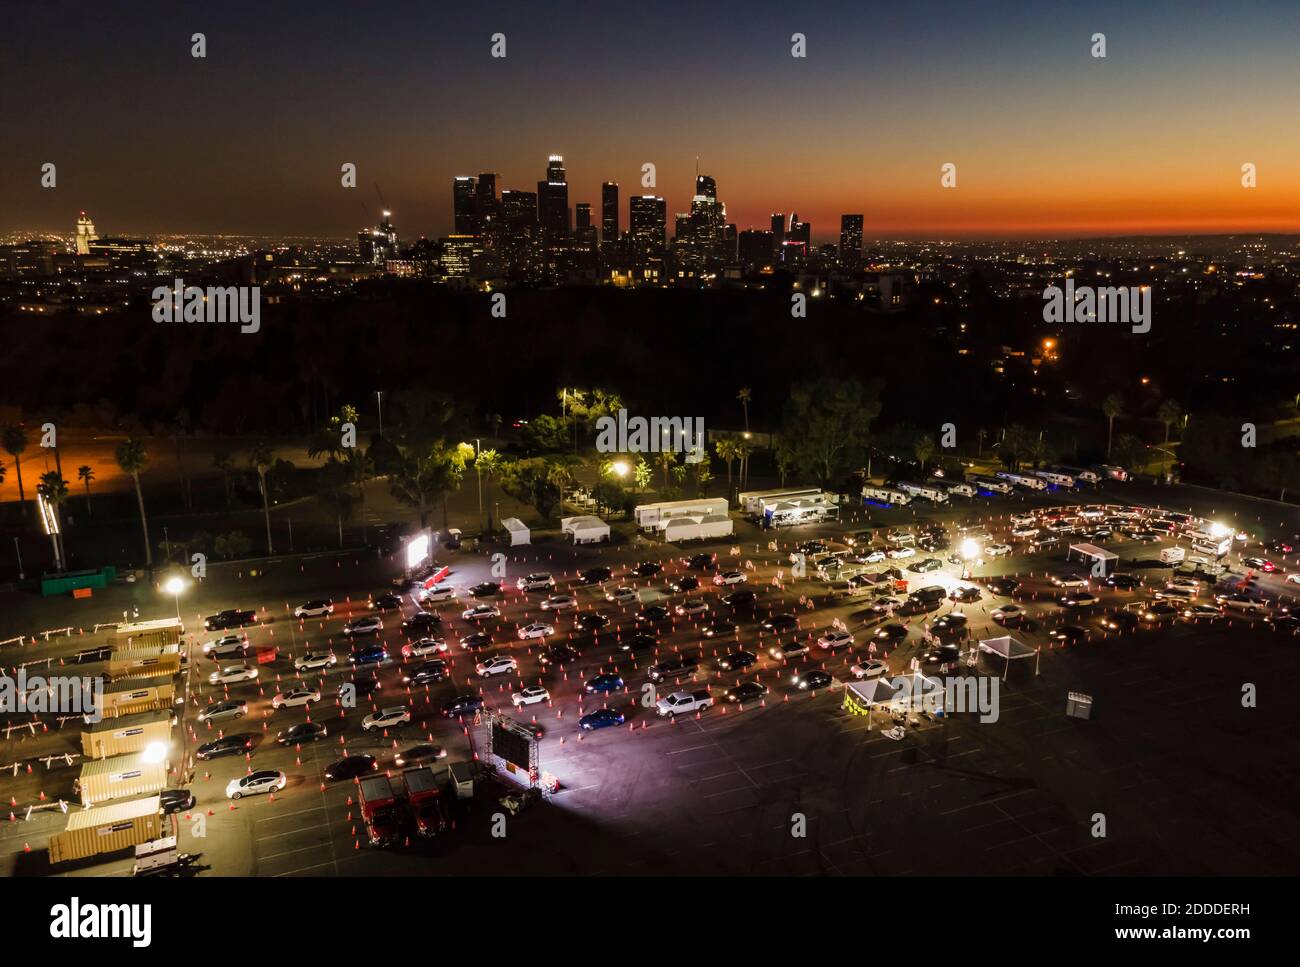 Los Angeles, USA. November 2020. Luftpanogramme von Downtown Los Angeles mit einer Drohne Kamera gemacht. Covid-19 in-Car-Tests im Dodger Stadium. 11/24/2020 Los Angeles, CA USA (Foto: Ted Soqui/SIPA USA) Quelle: SIPA USA/Alamy Live News Stockfoto